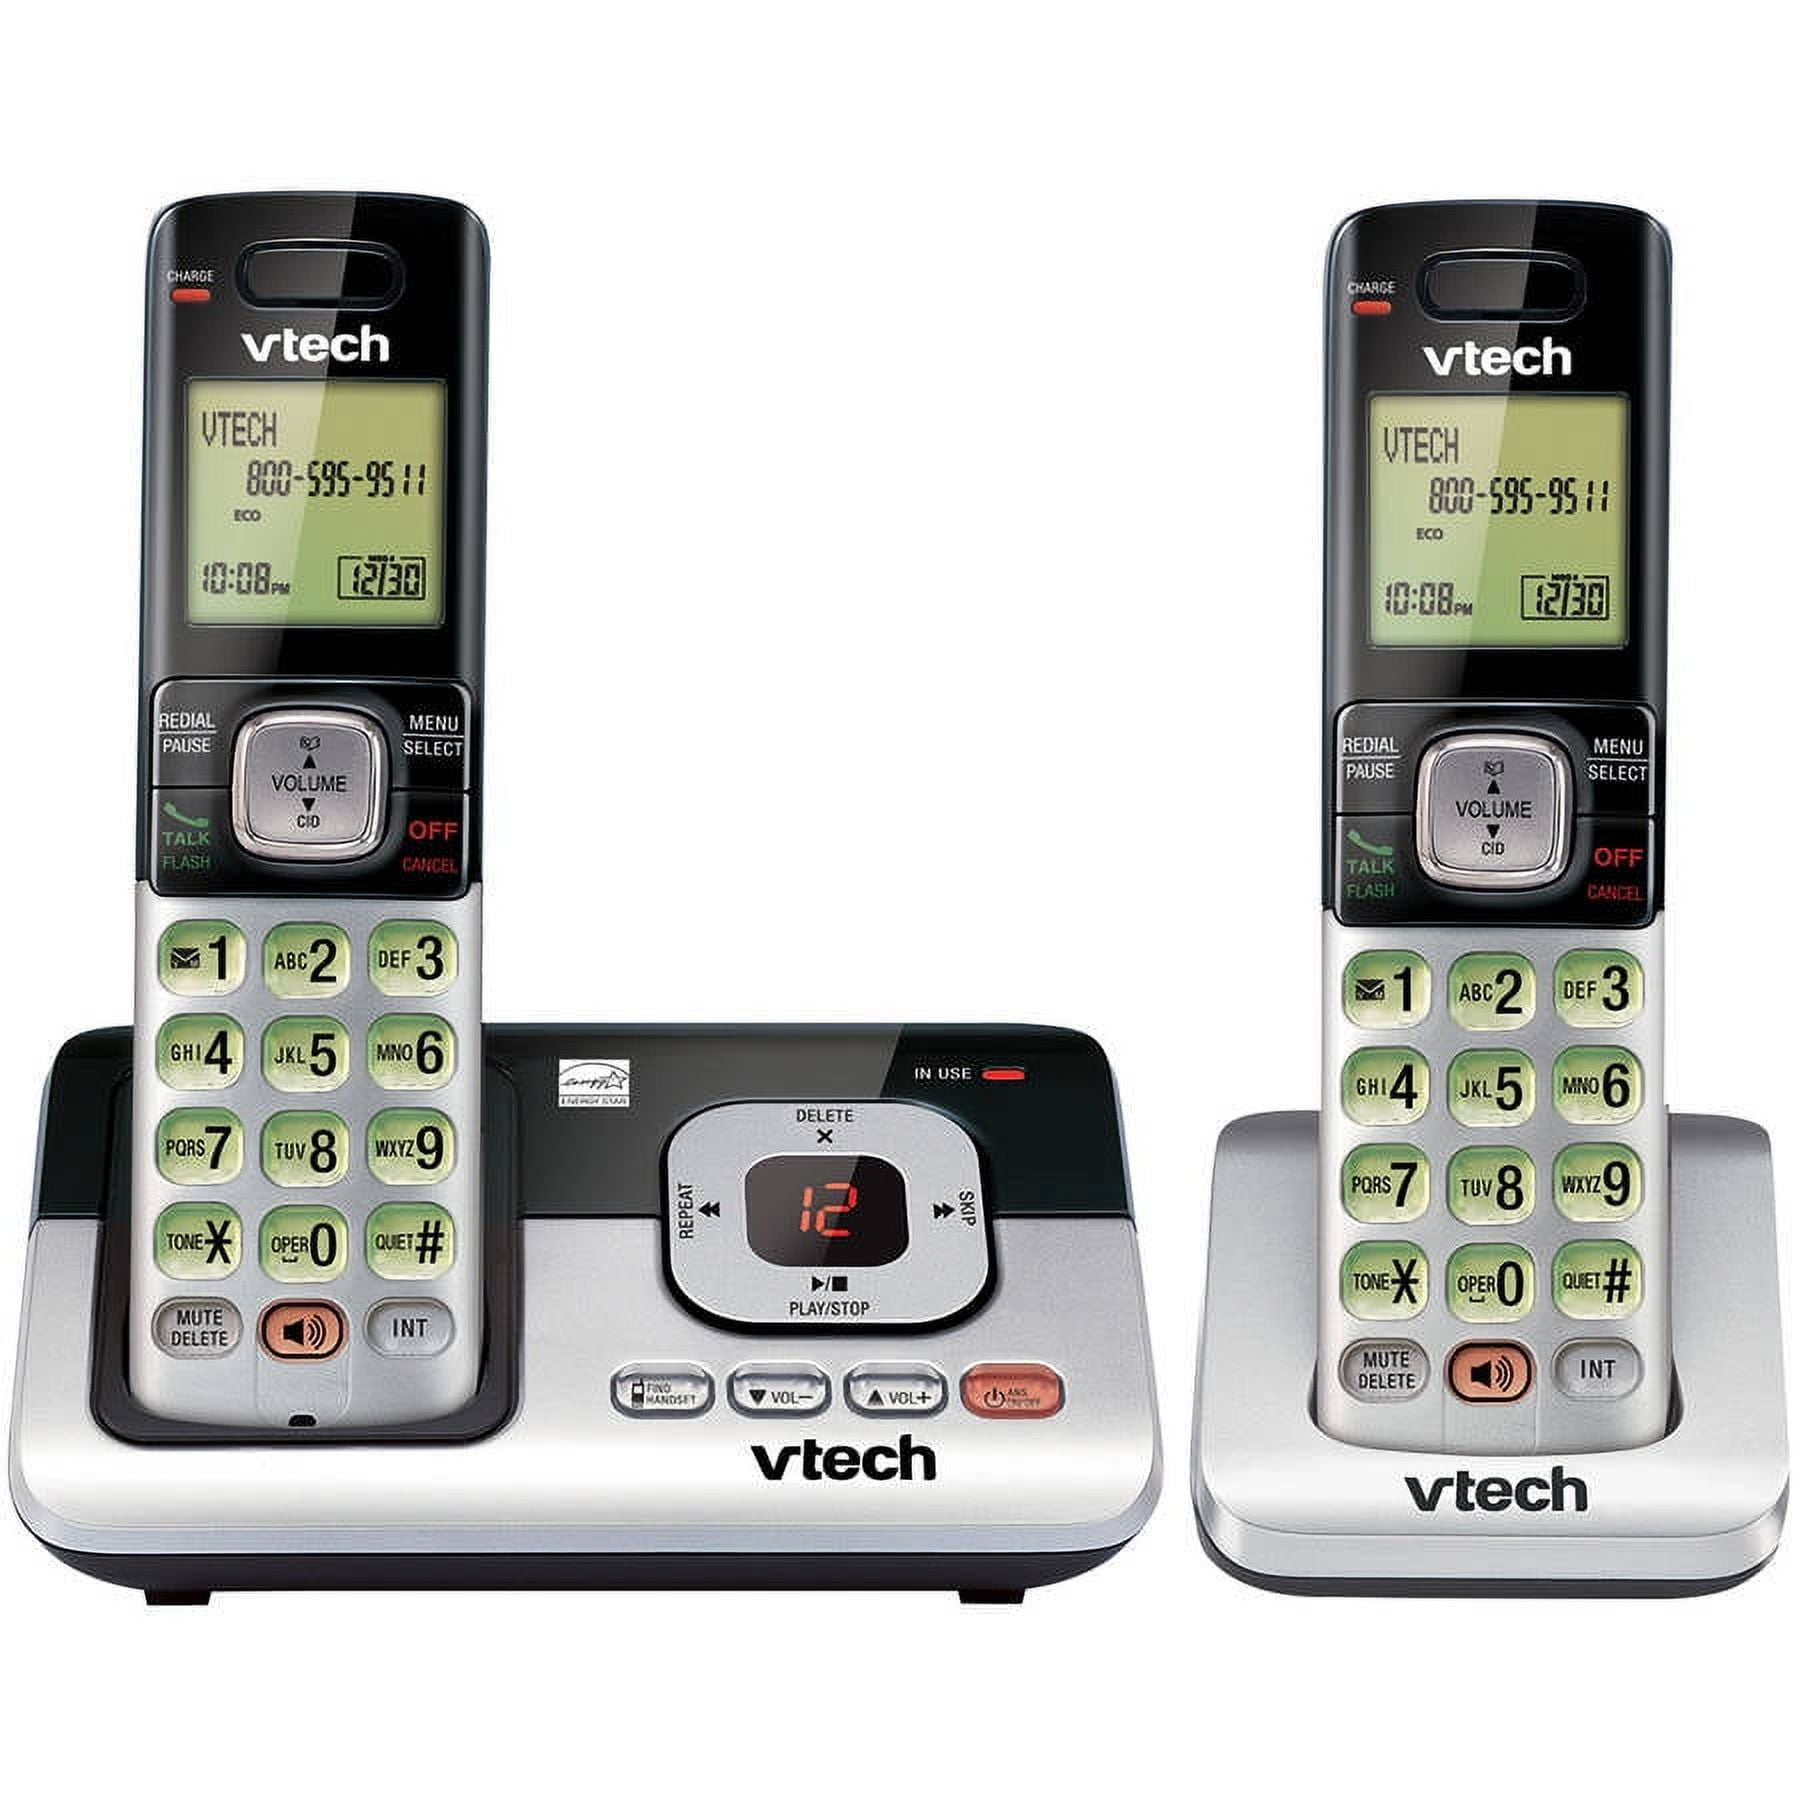 VTech Cordless Phones Official Site - VTech Phones